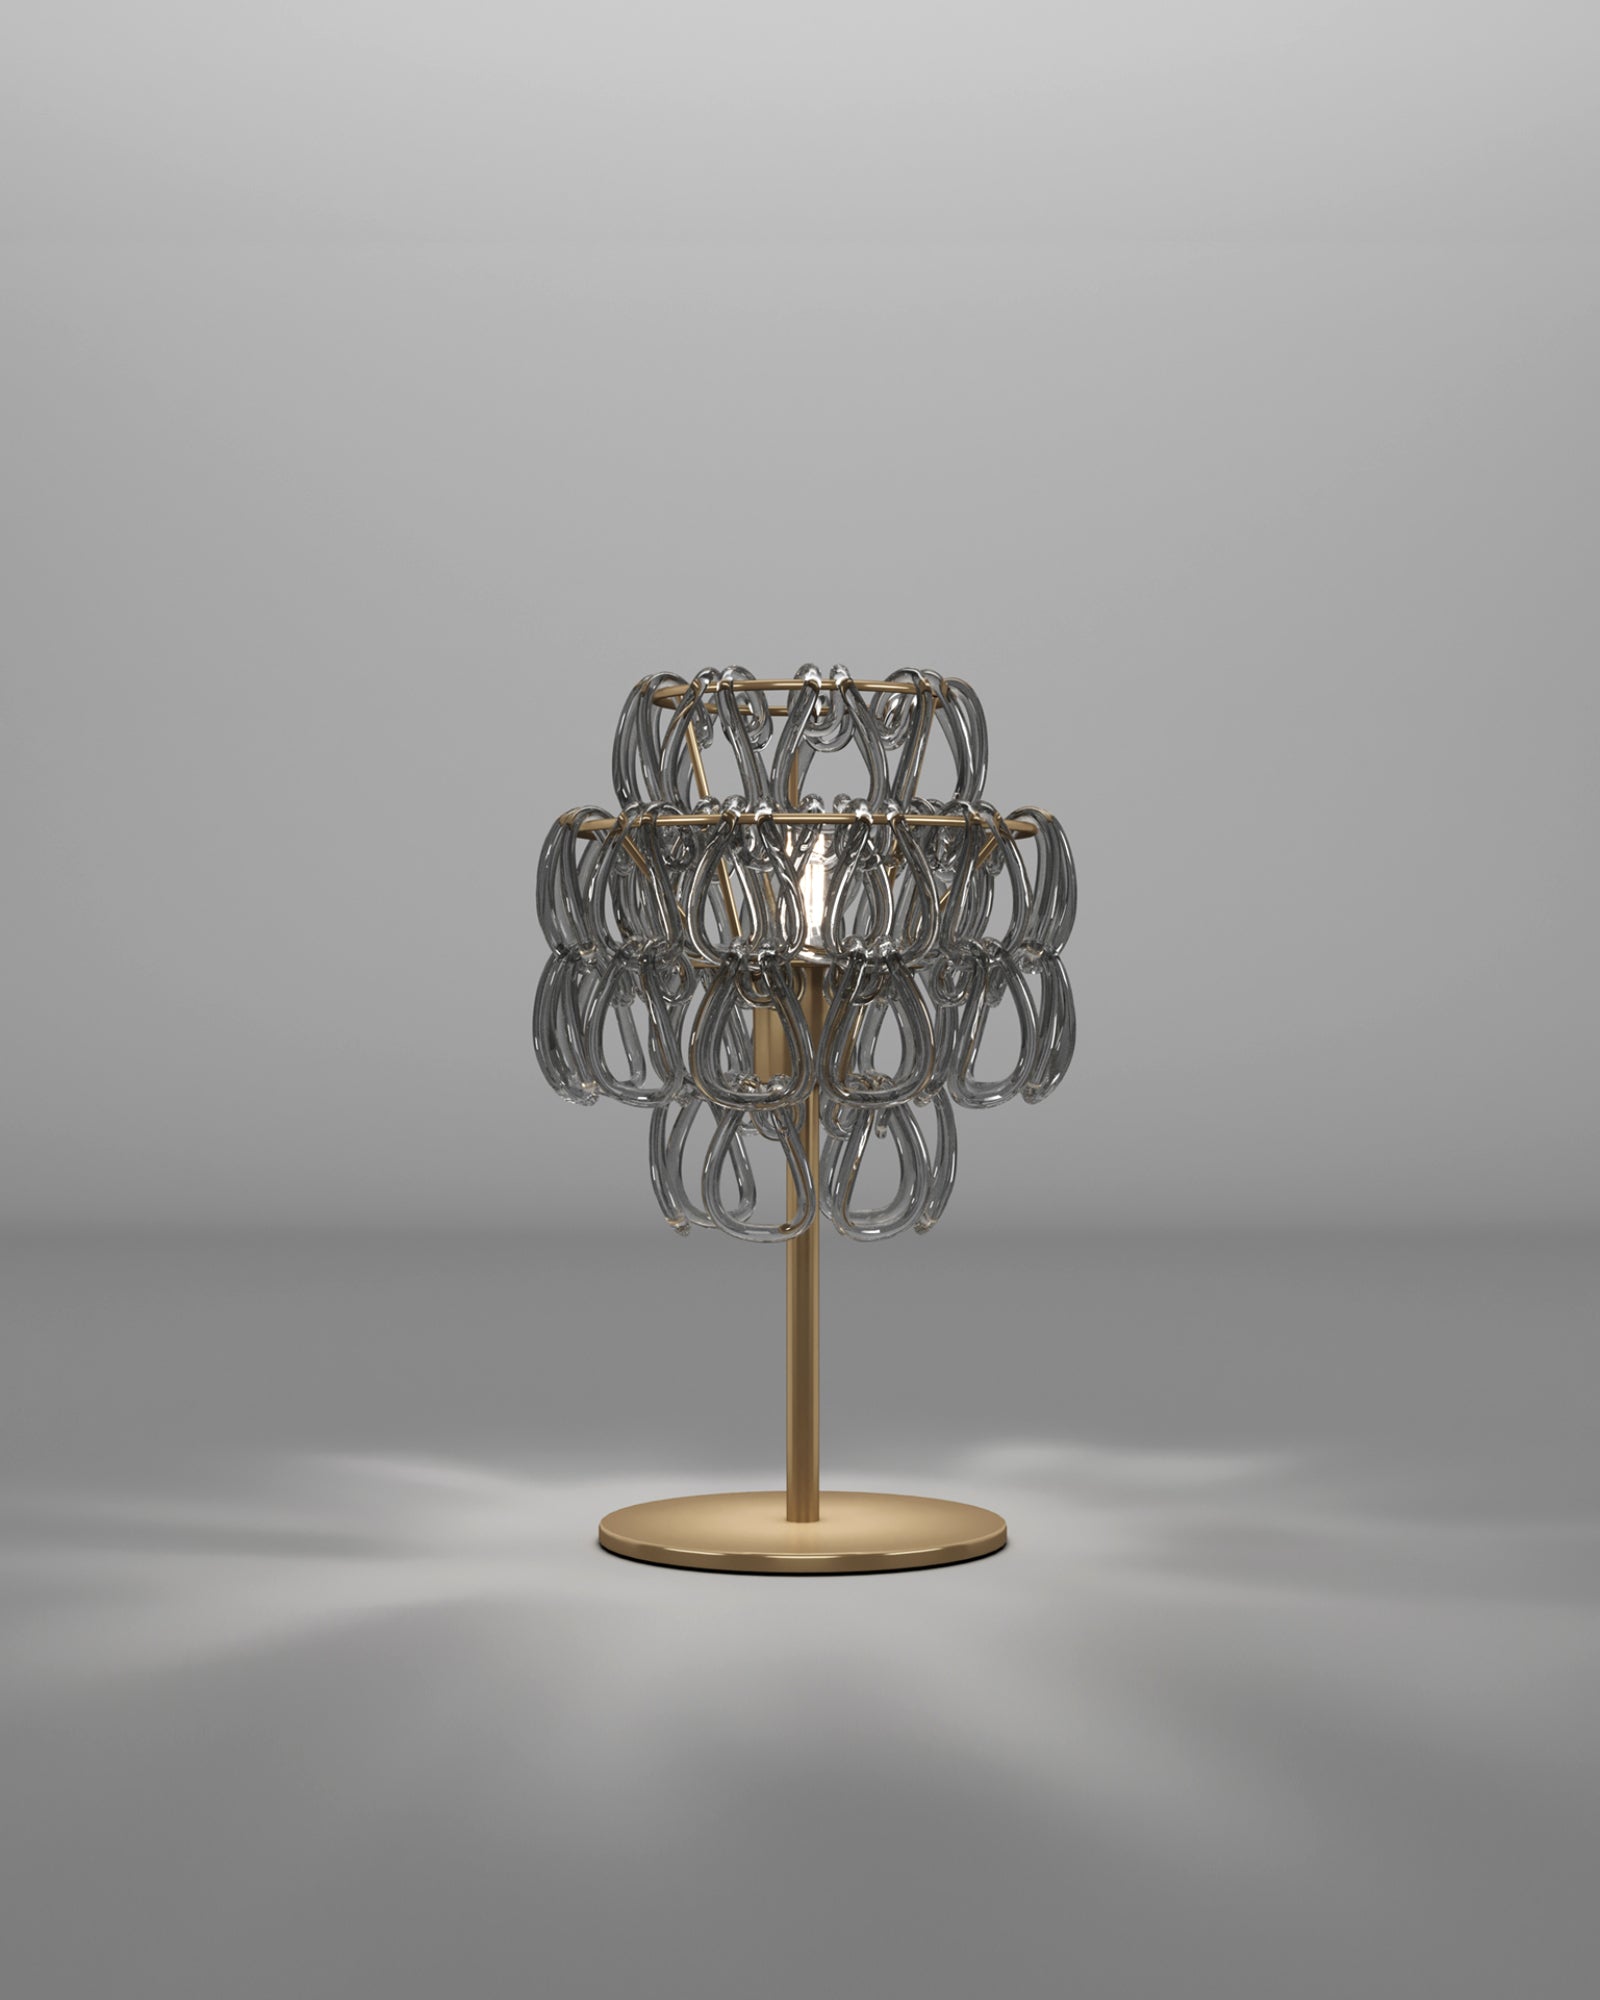 Minigiogali Table Lamp